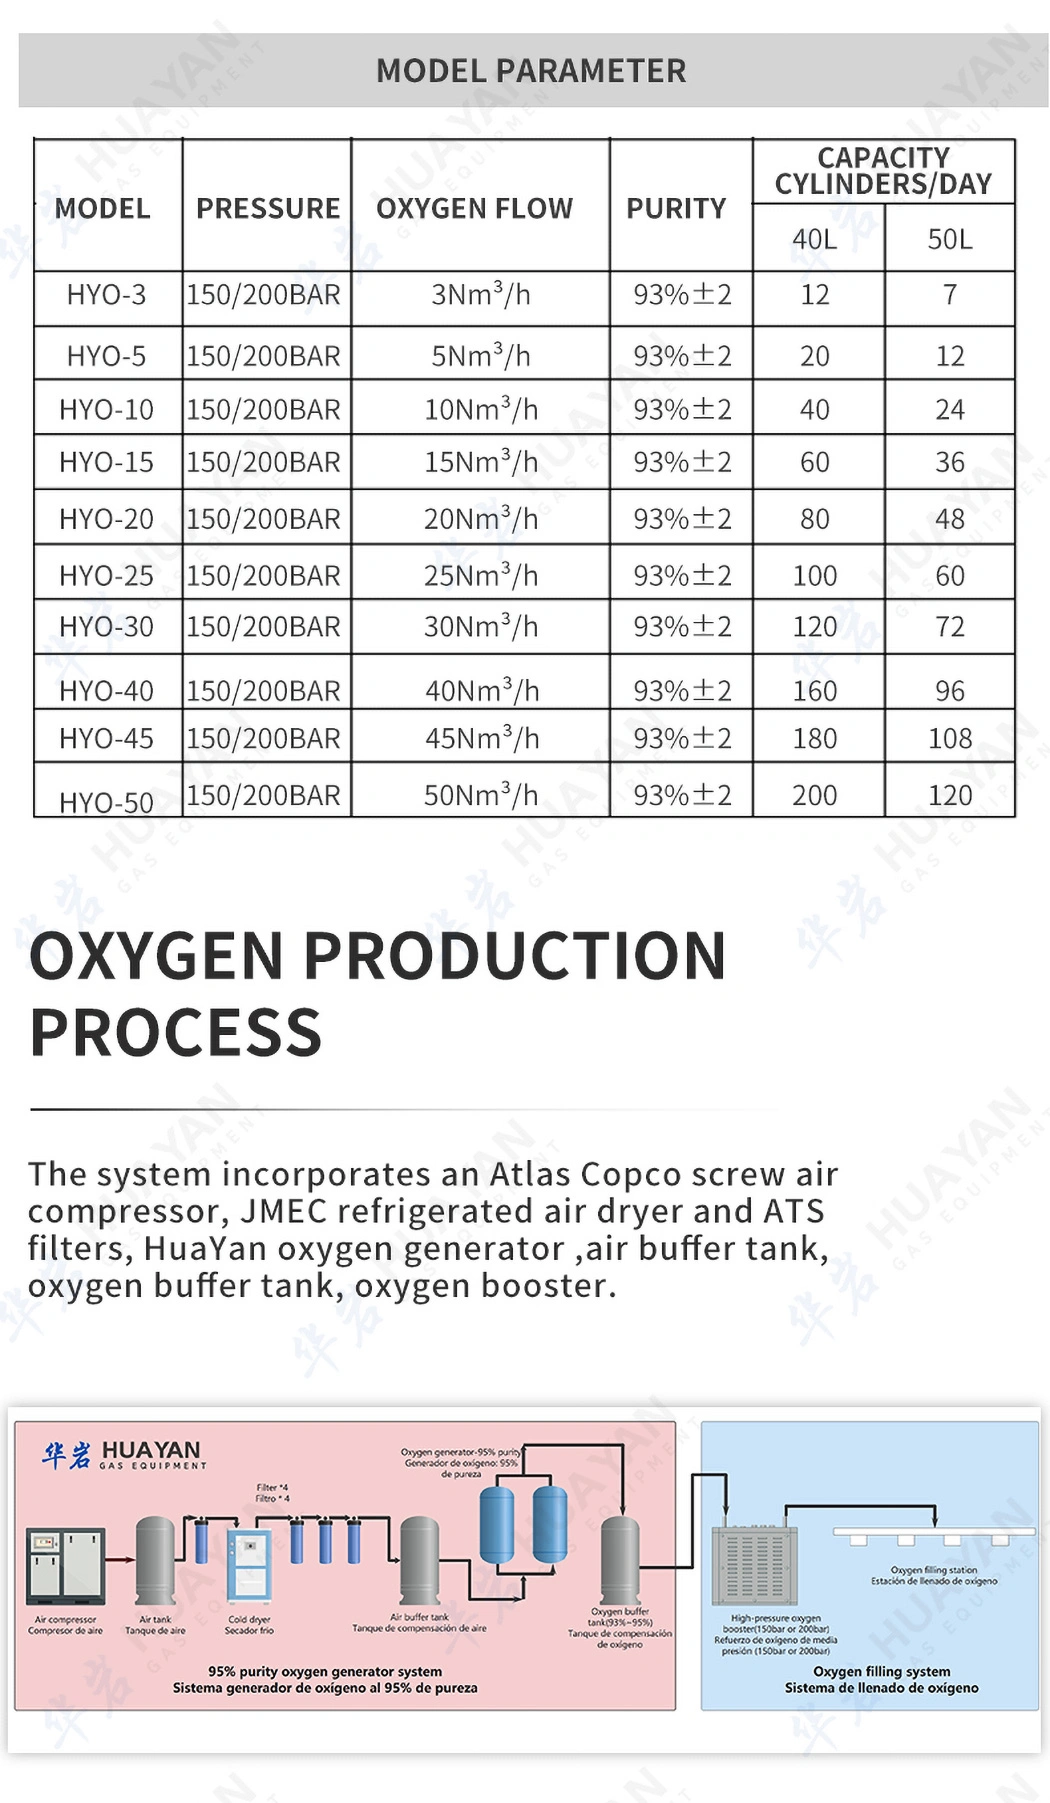 Liquid Air Separation Plant Liquid Oxygen Nitrogen Equipment for Sale